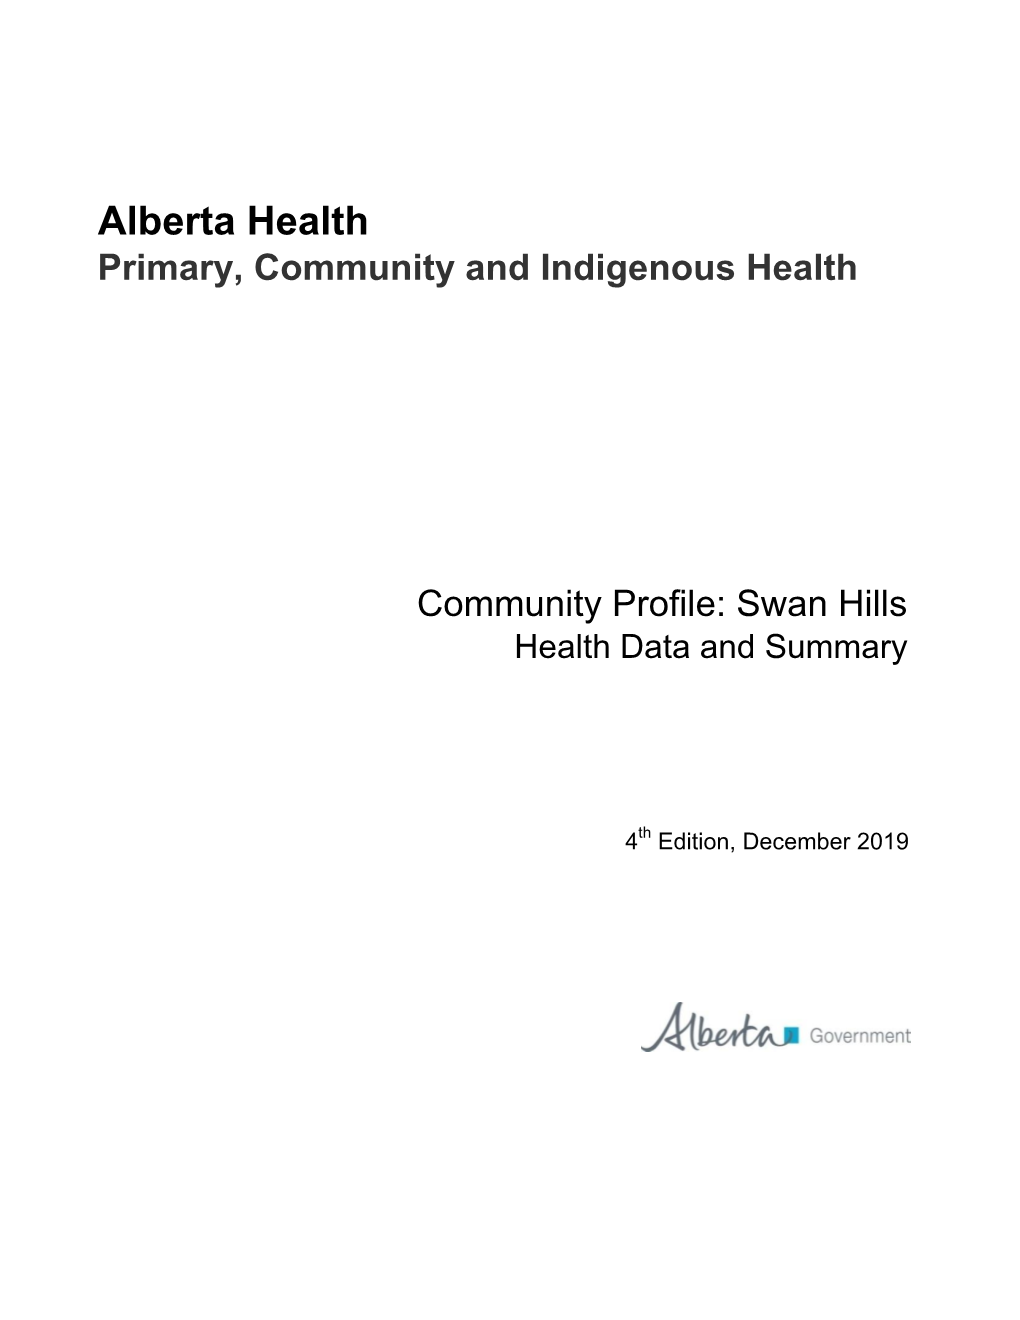 Community Profile: Swan Hills Health Data and Summary. 4Th Edition